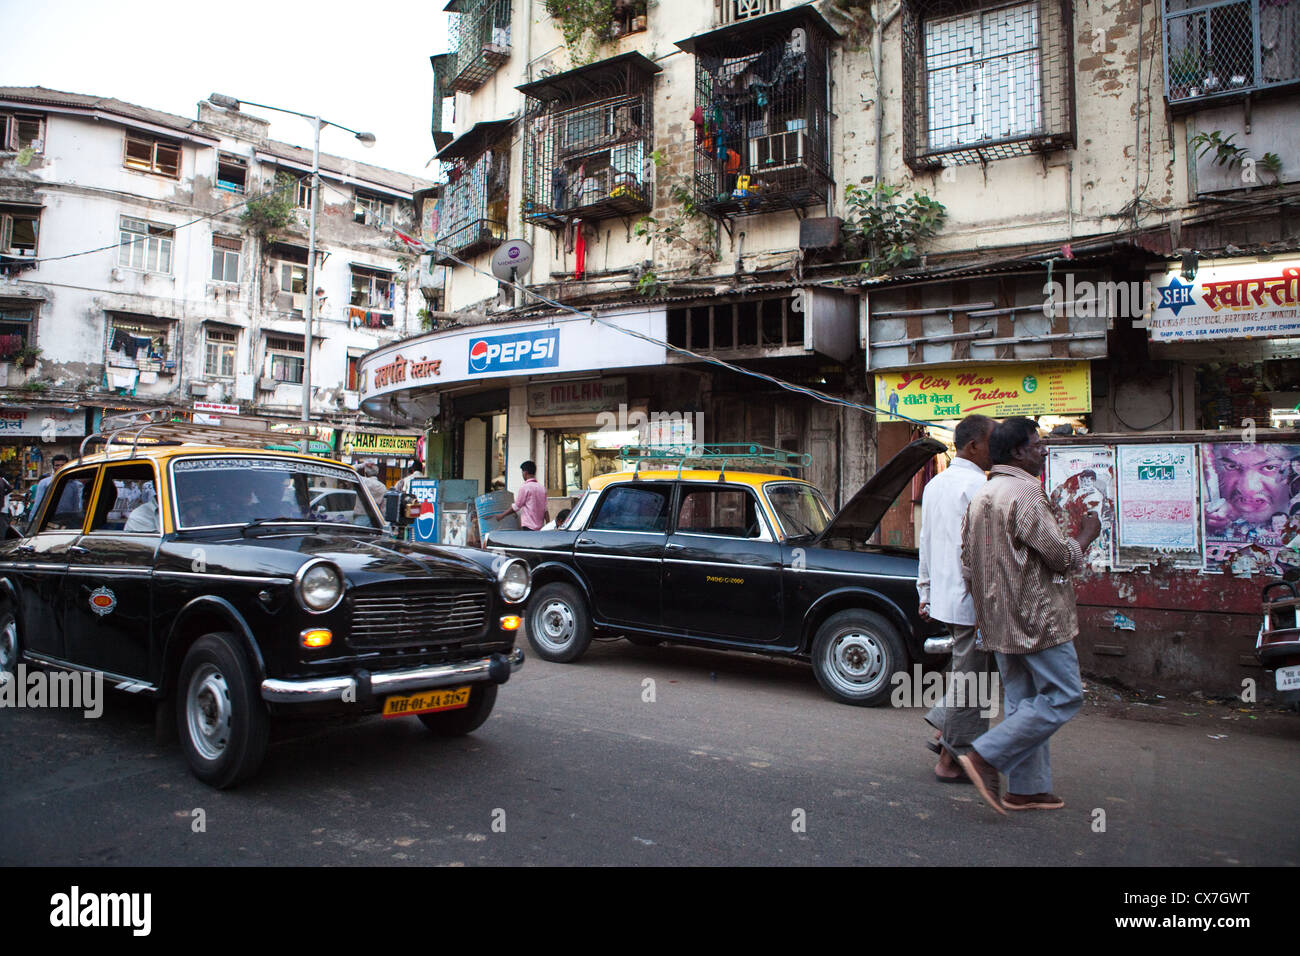 A street scene in Mumbai, India Stock Photo